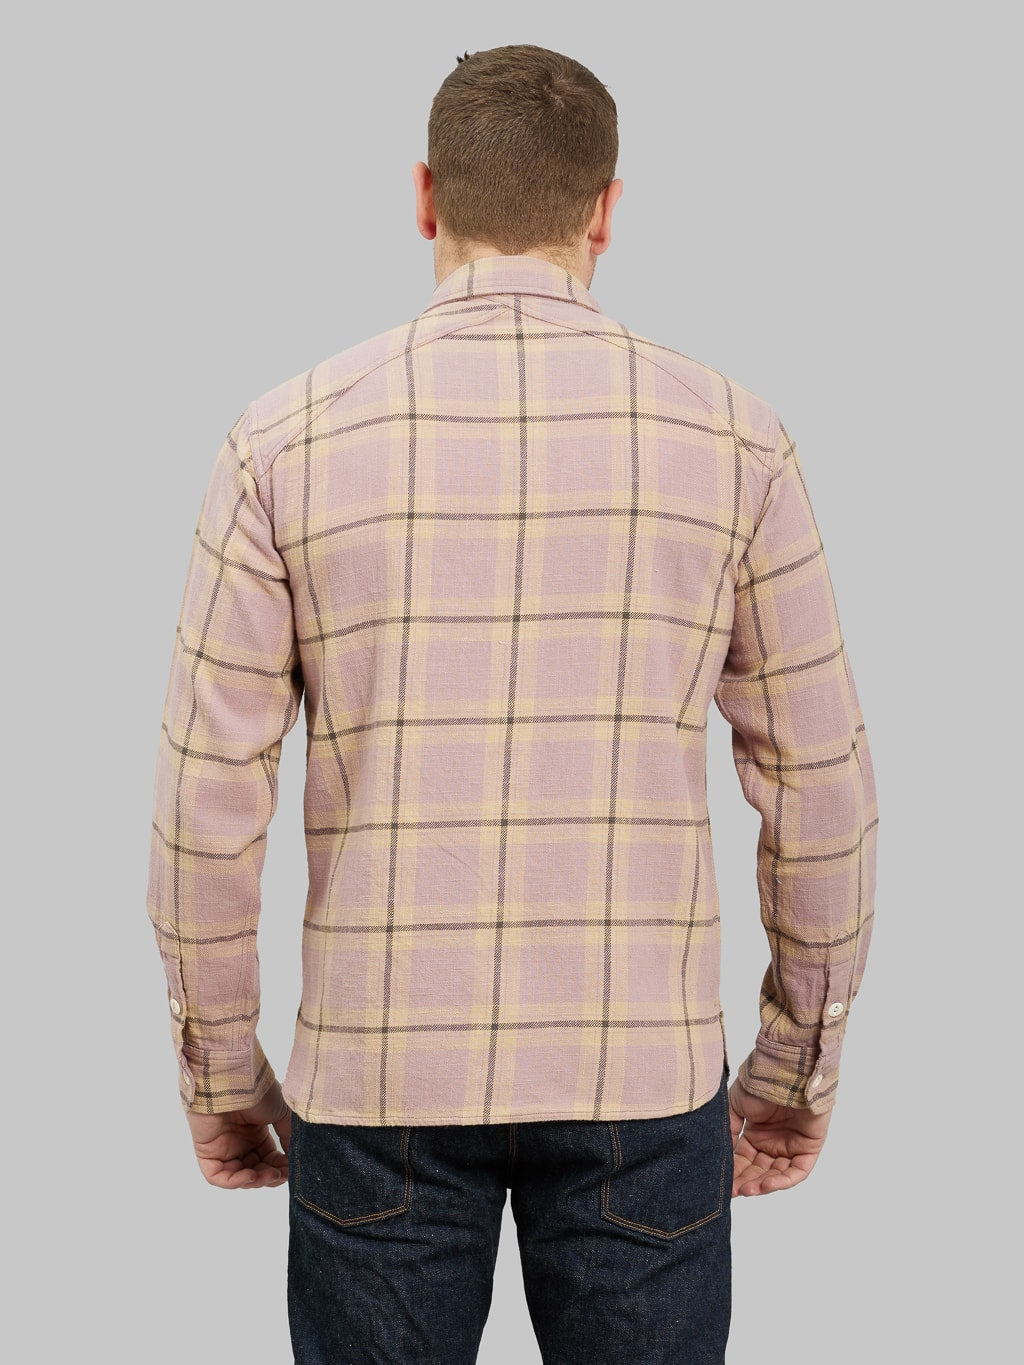 3sixteen Crosscut Flannel Mauve Slub Check shirt model back fit